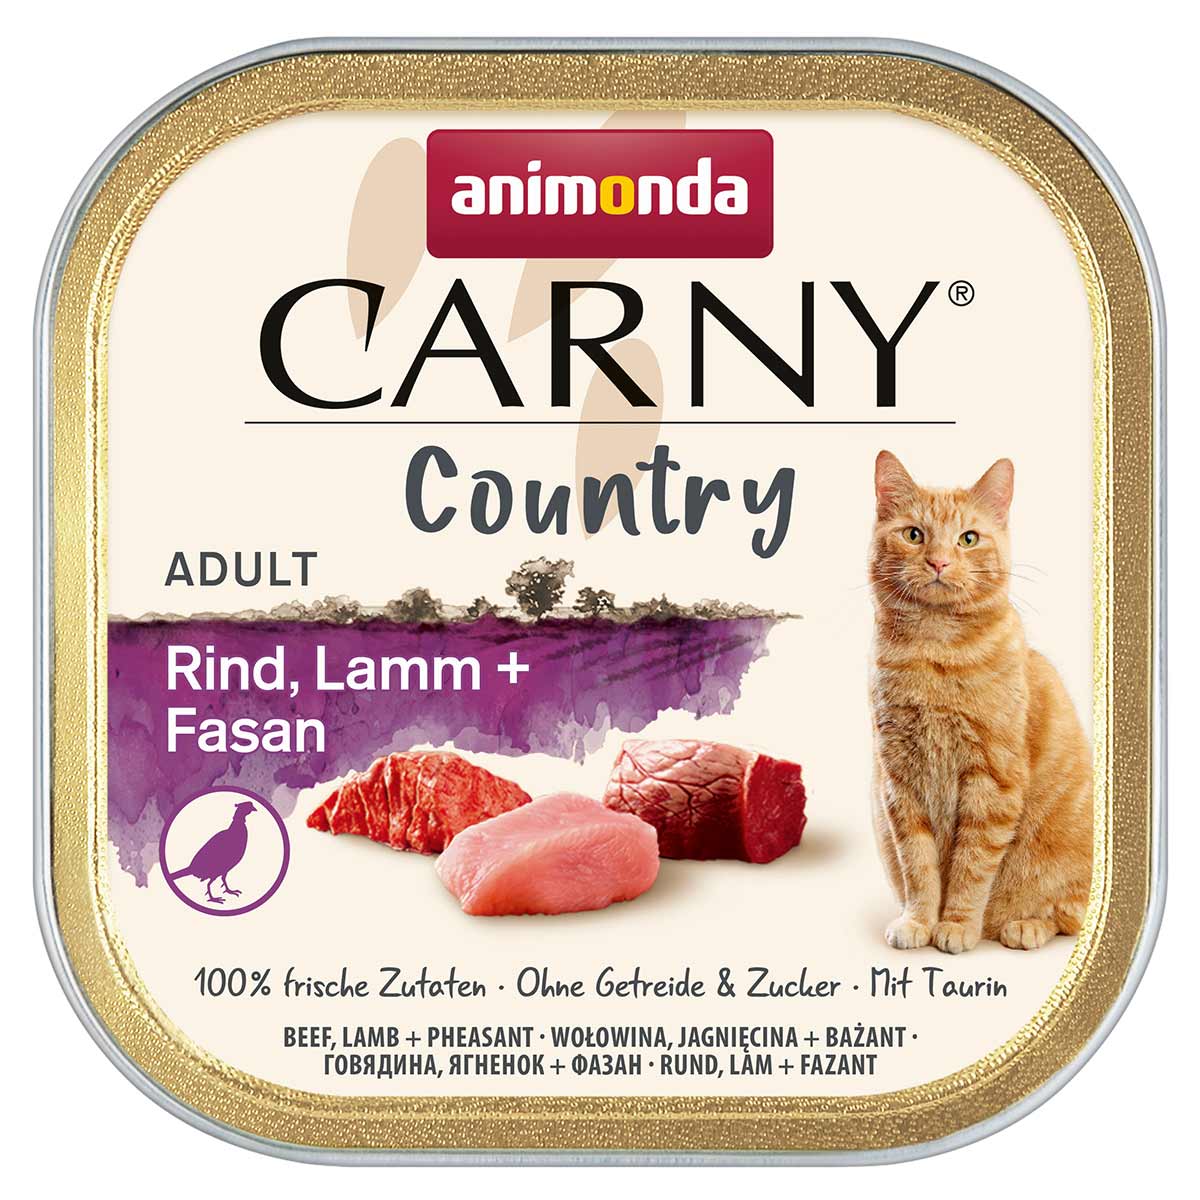 animonda Carny Adult Country Rind, Lamm + Fasan 32x100g von animonda Carny